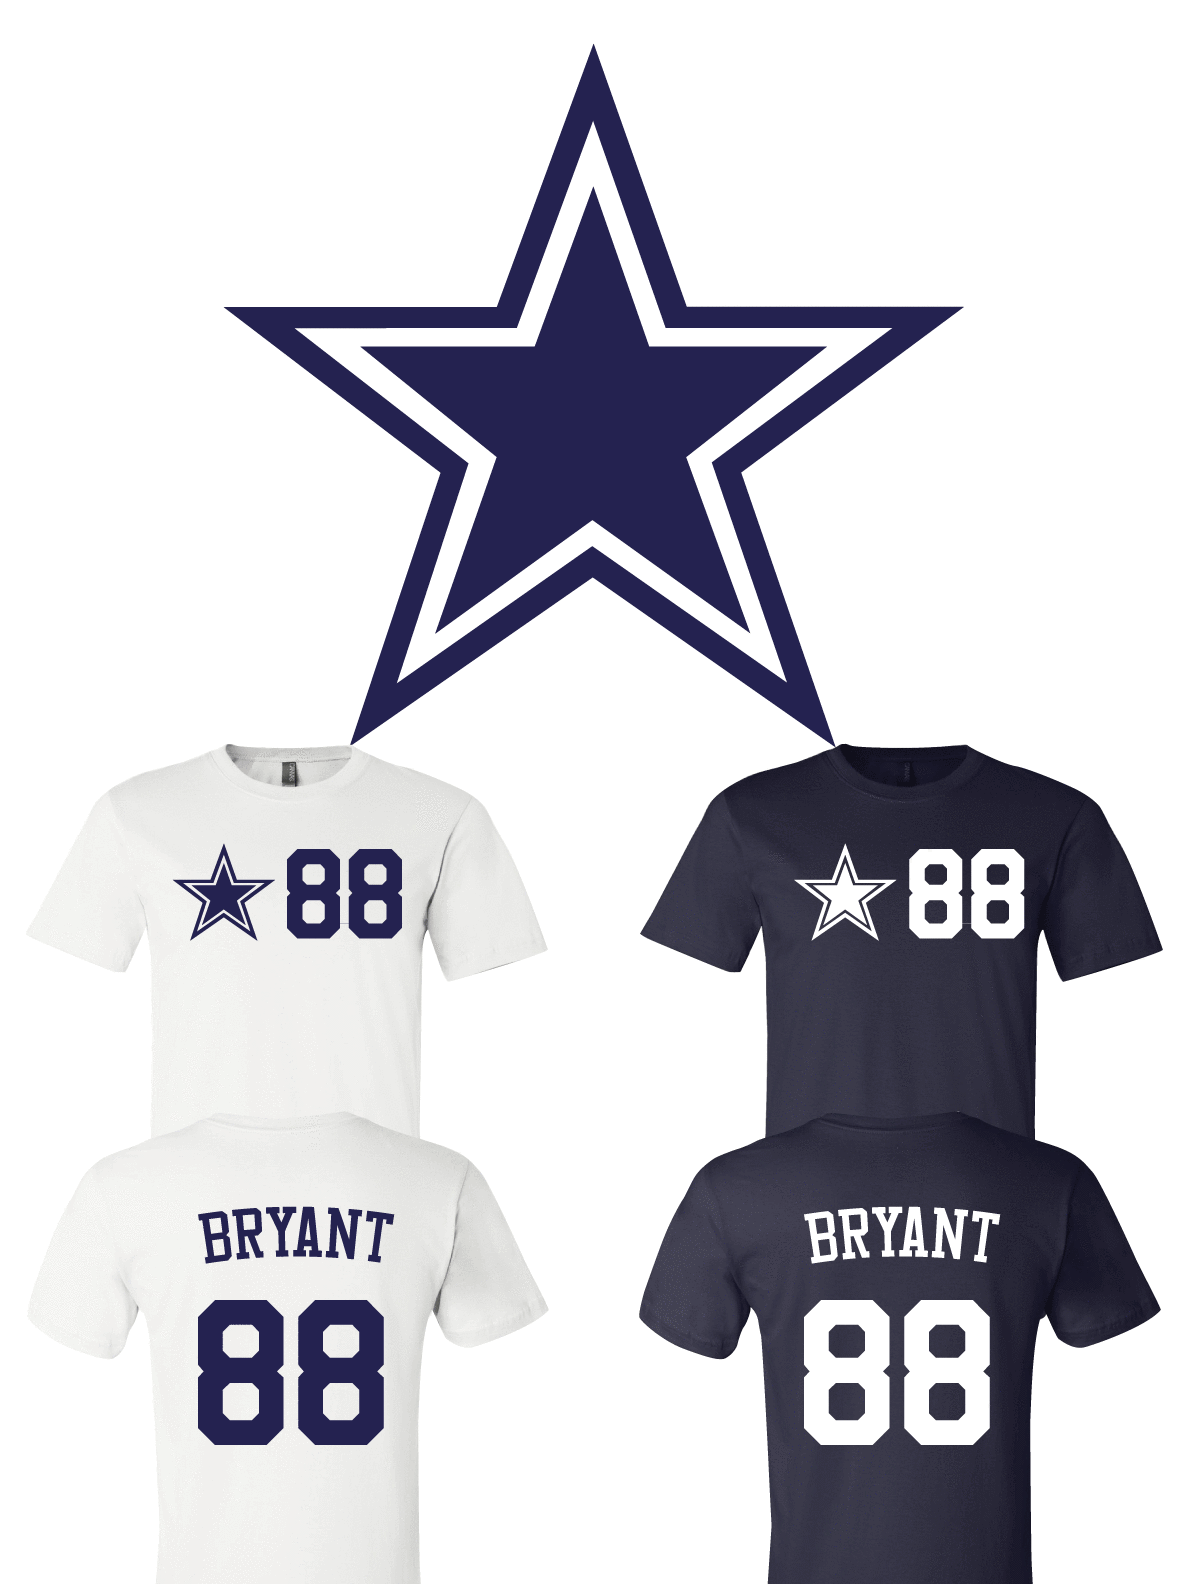 Dez Bryant #88 Dallas Cowboys Jersey player shirt